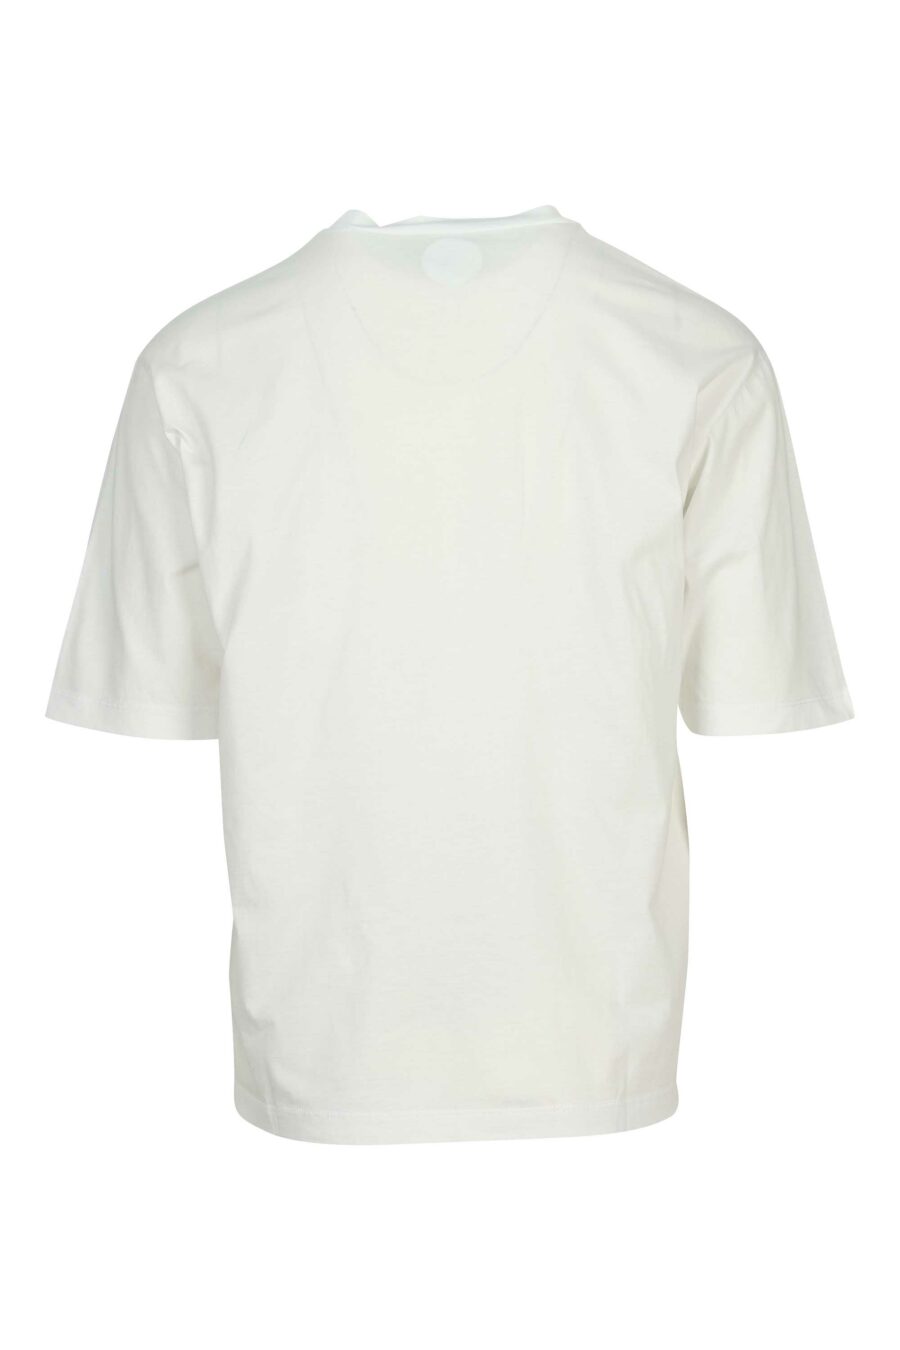 Camiseta blanca con maxilogo "canadian team 1995" - 8054148301507 1